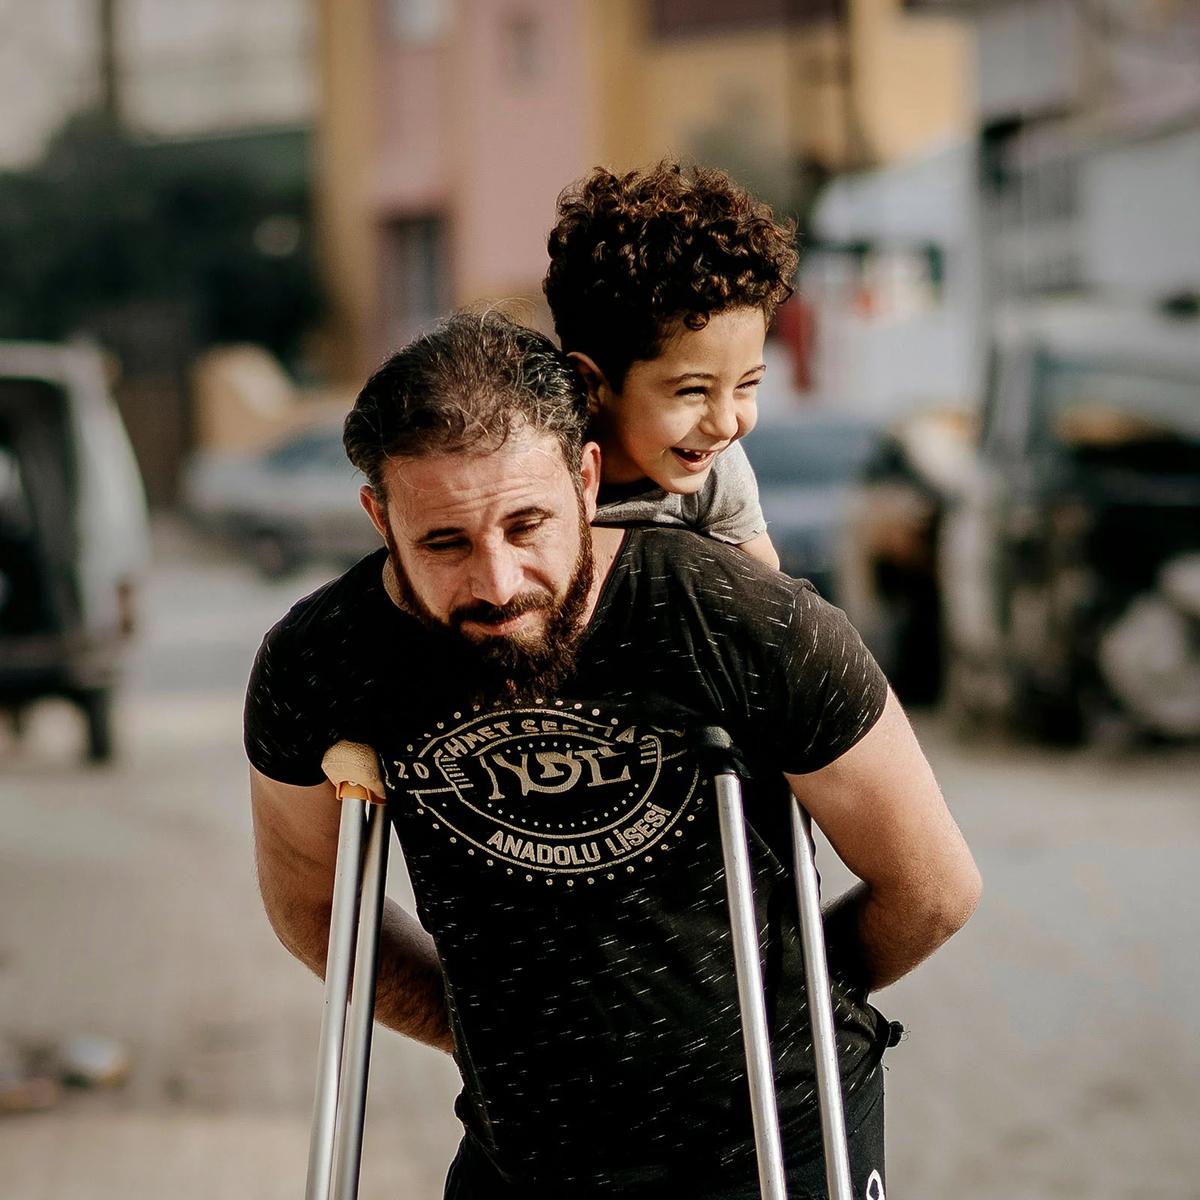 Munzir with his son, Mustafa. (Courtesy of <a href="https://www.instagram.com/mehmetaslan.photoarts/">Mehmet Aslan</a>)